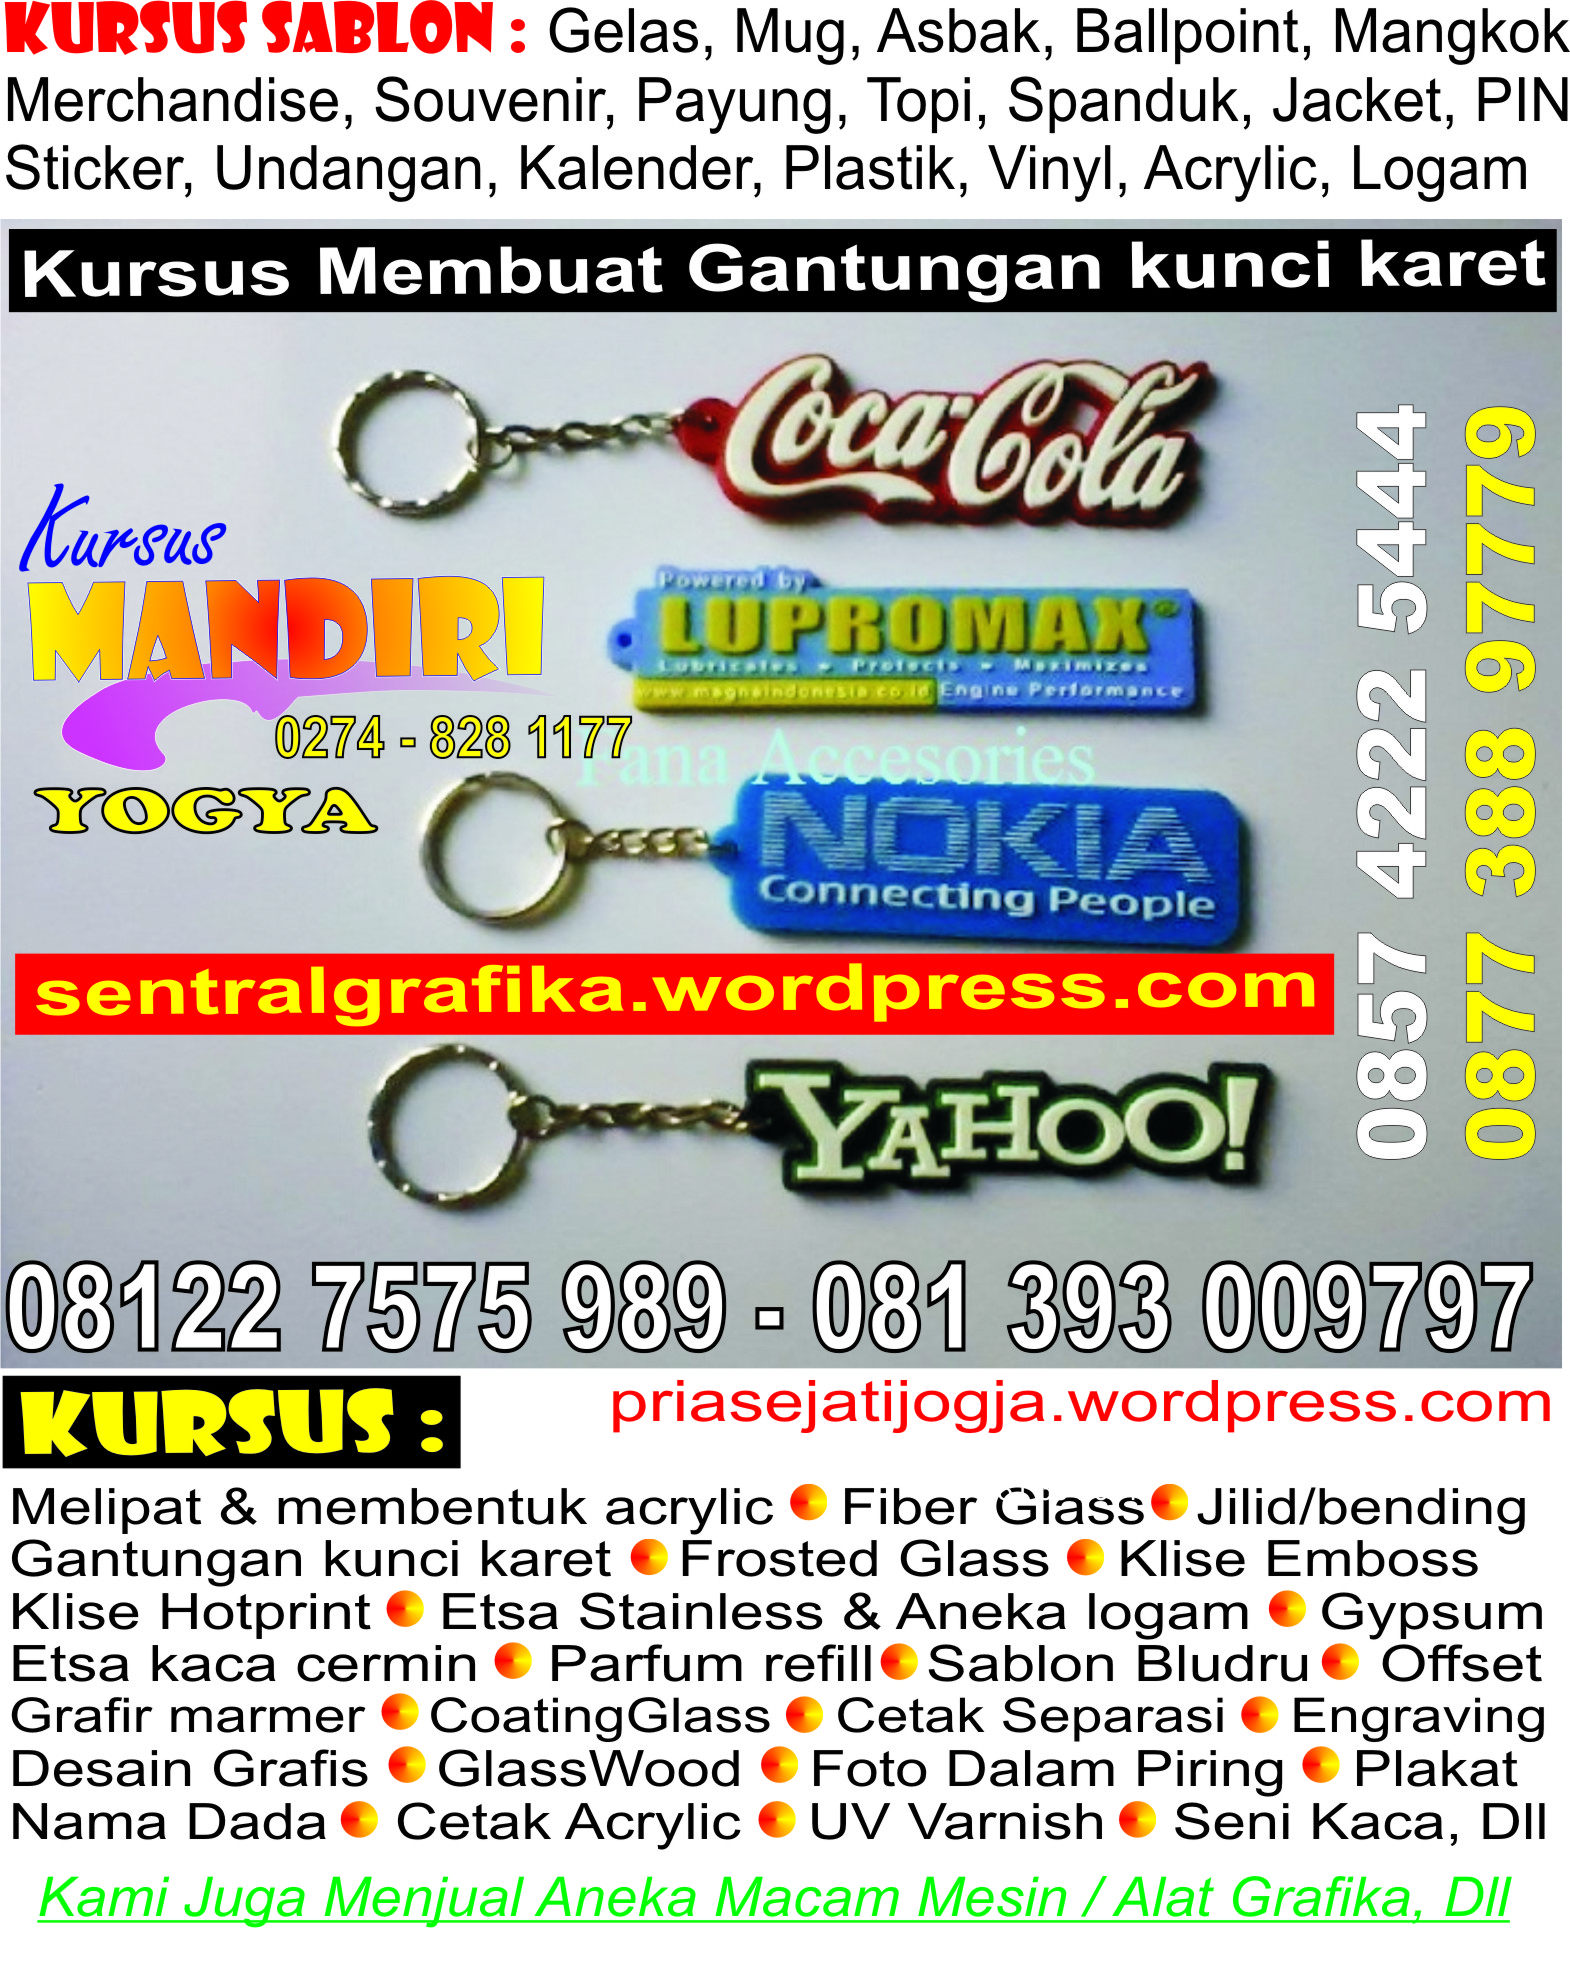 KURSUS Kompaskoranwordpresscom Cetak Offset Graphic